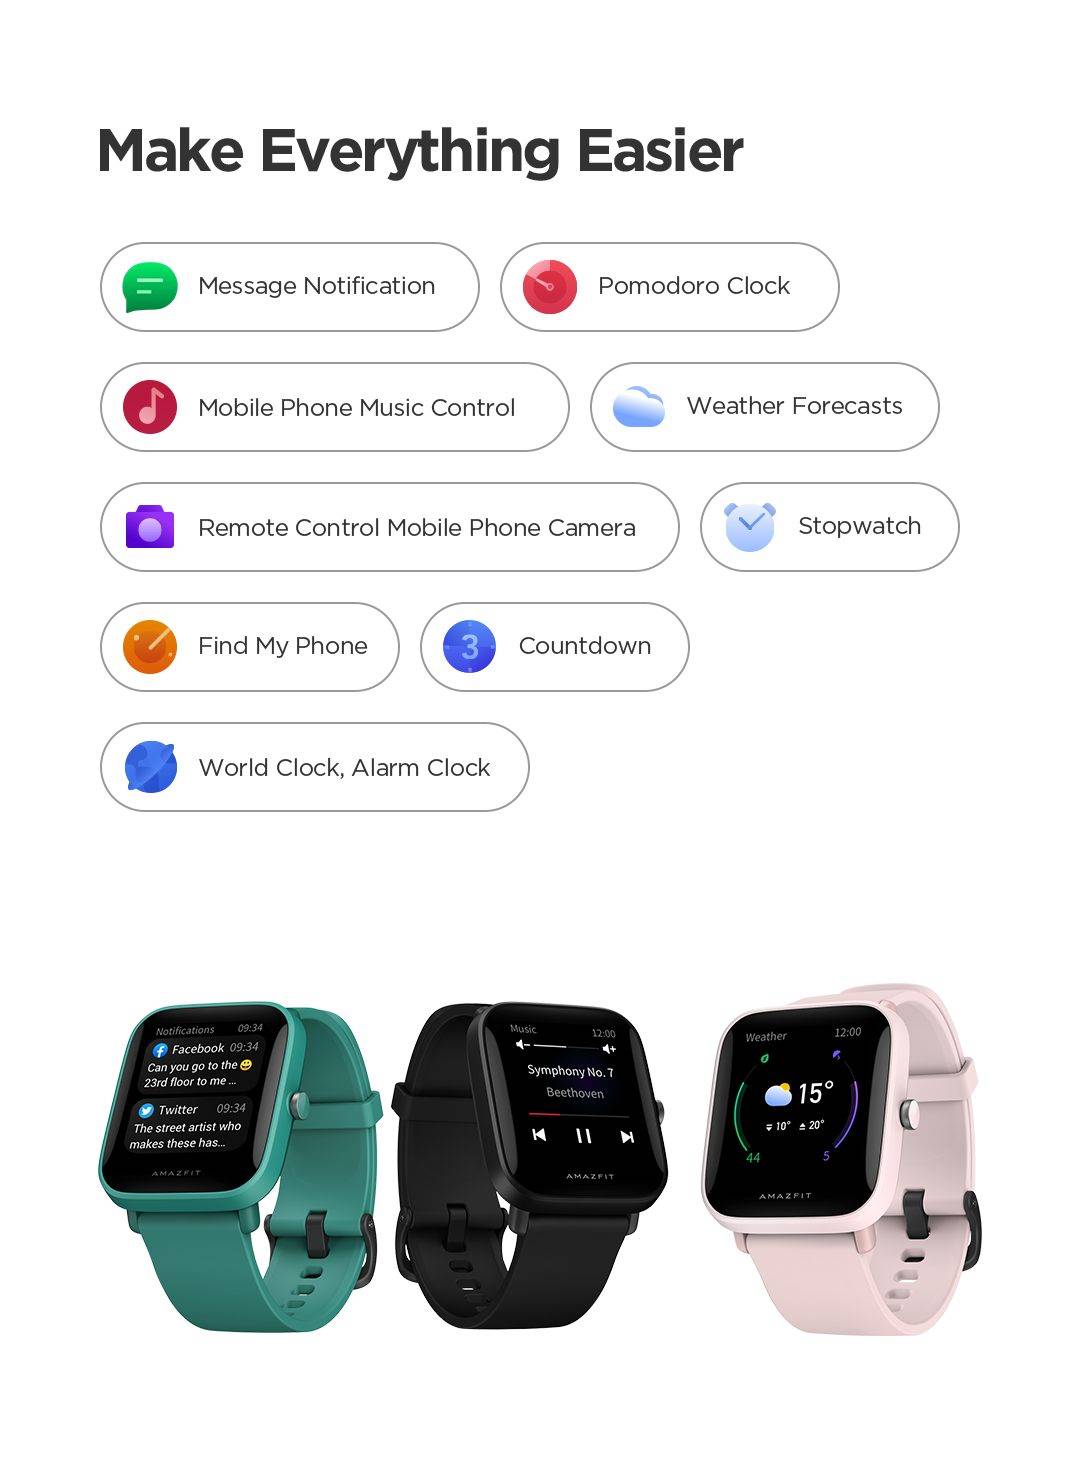 Buy Amazfit Bip U Smart Watch @ ₹1799.0